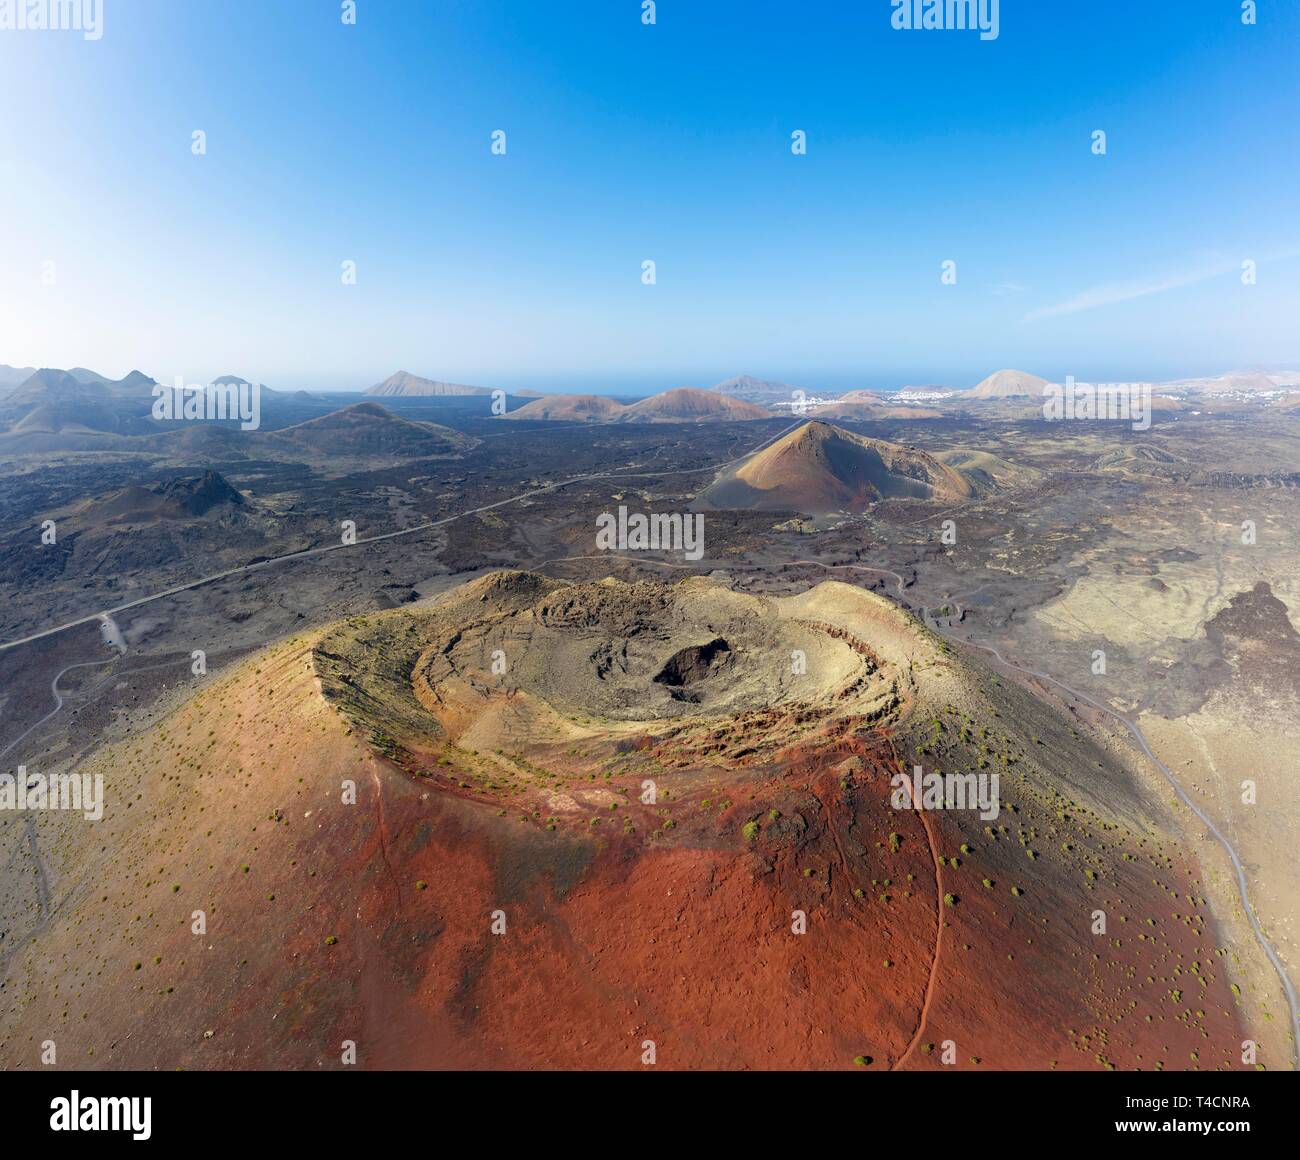 Volcano Montana Colorada with volcano crater, drone photo, Lanzarote, Canary Islands, Spain Stock Photo